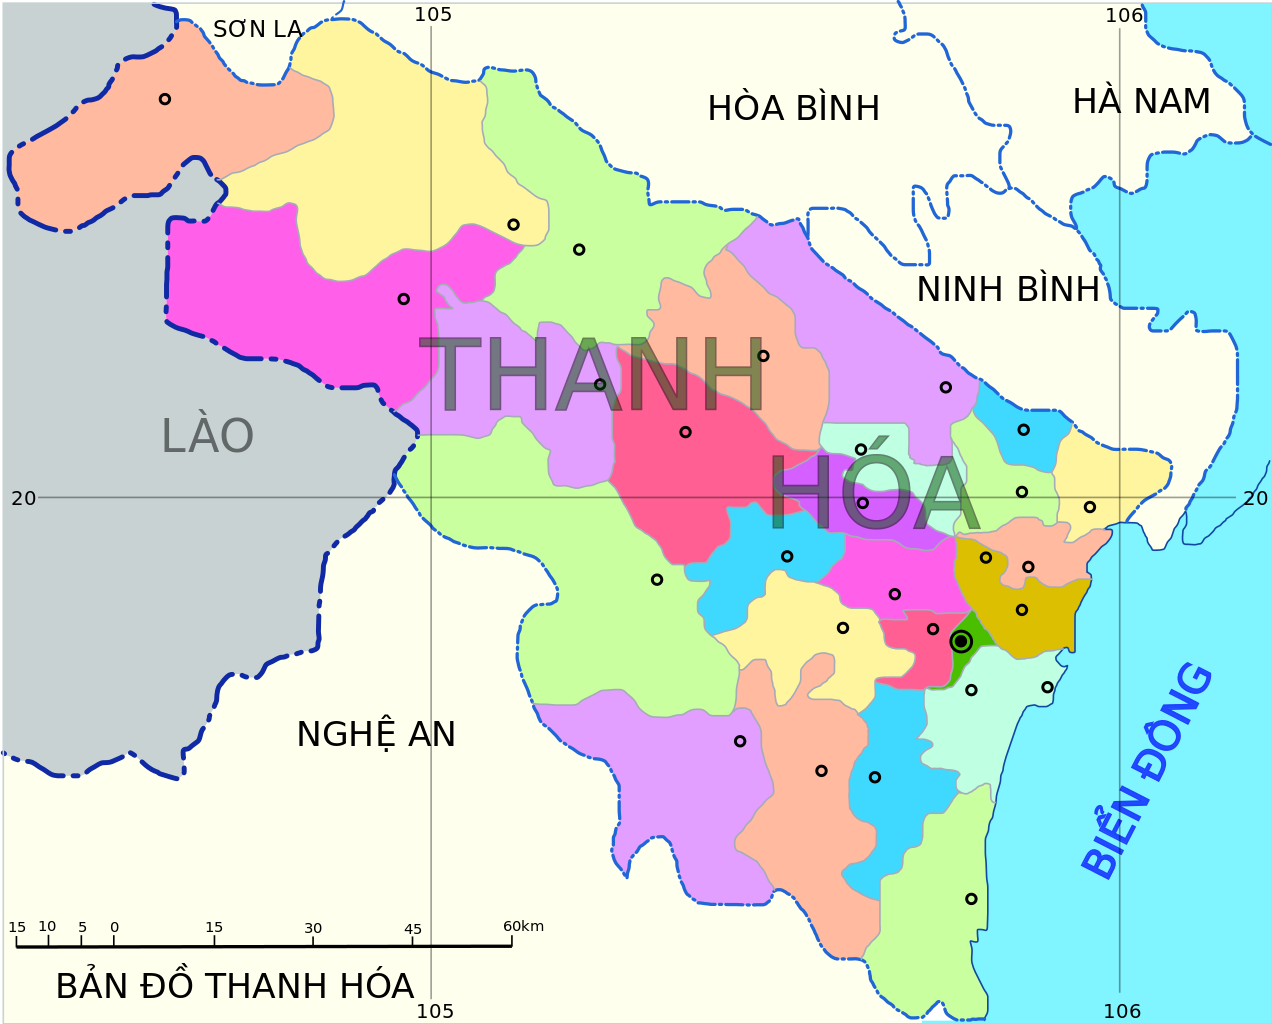 Thanh Hoa Province